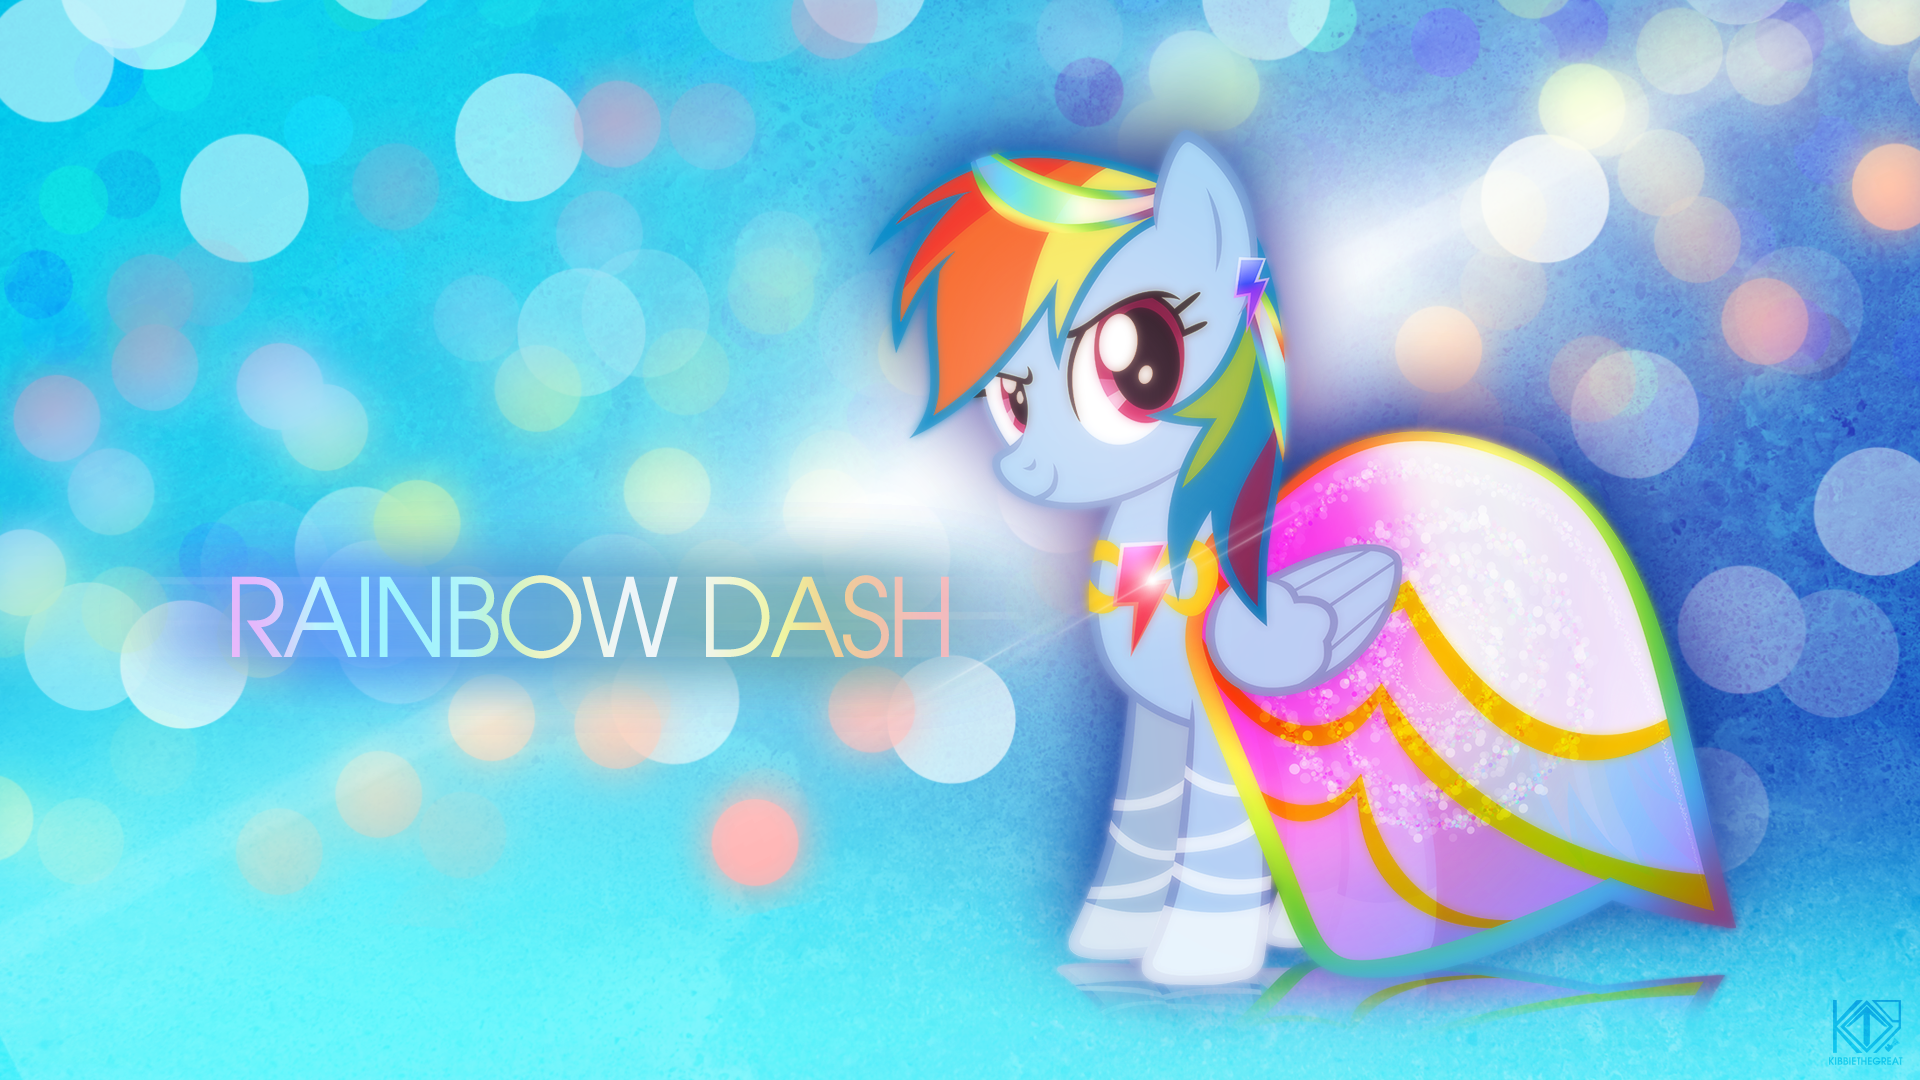 Dash's Summer Dress by KibbieTheGreat and MrLolcats17